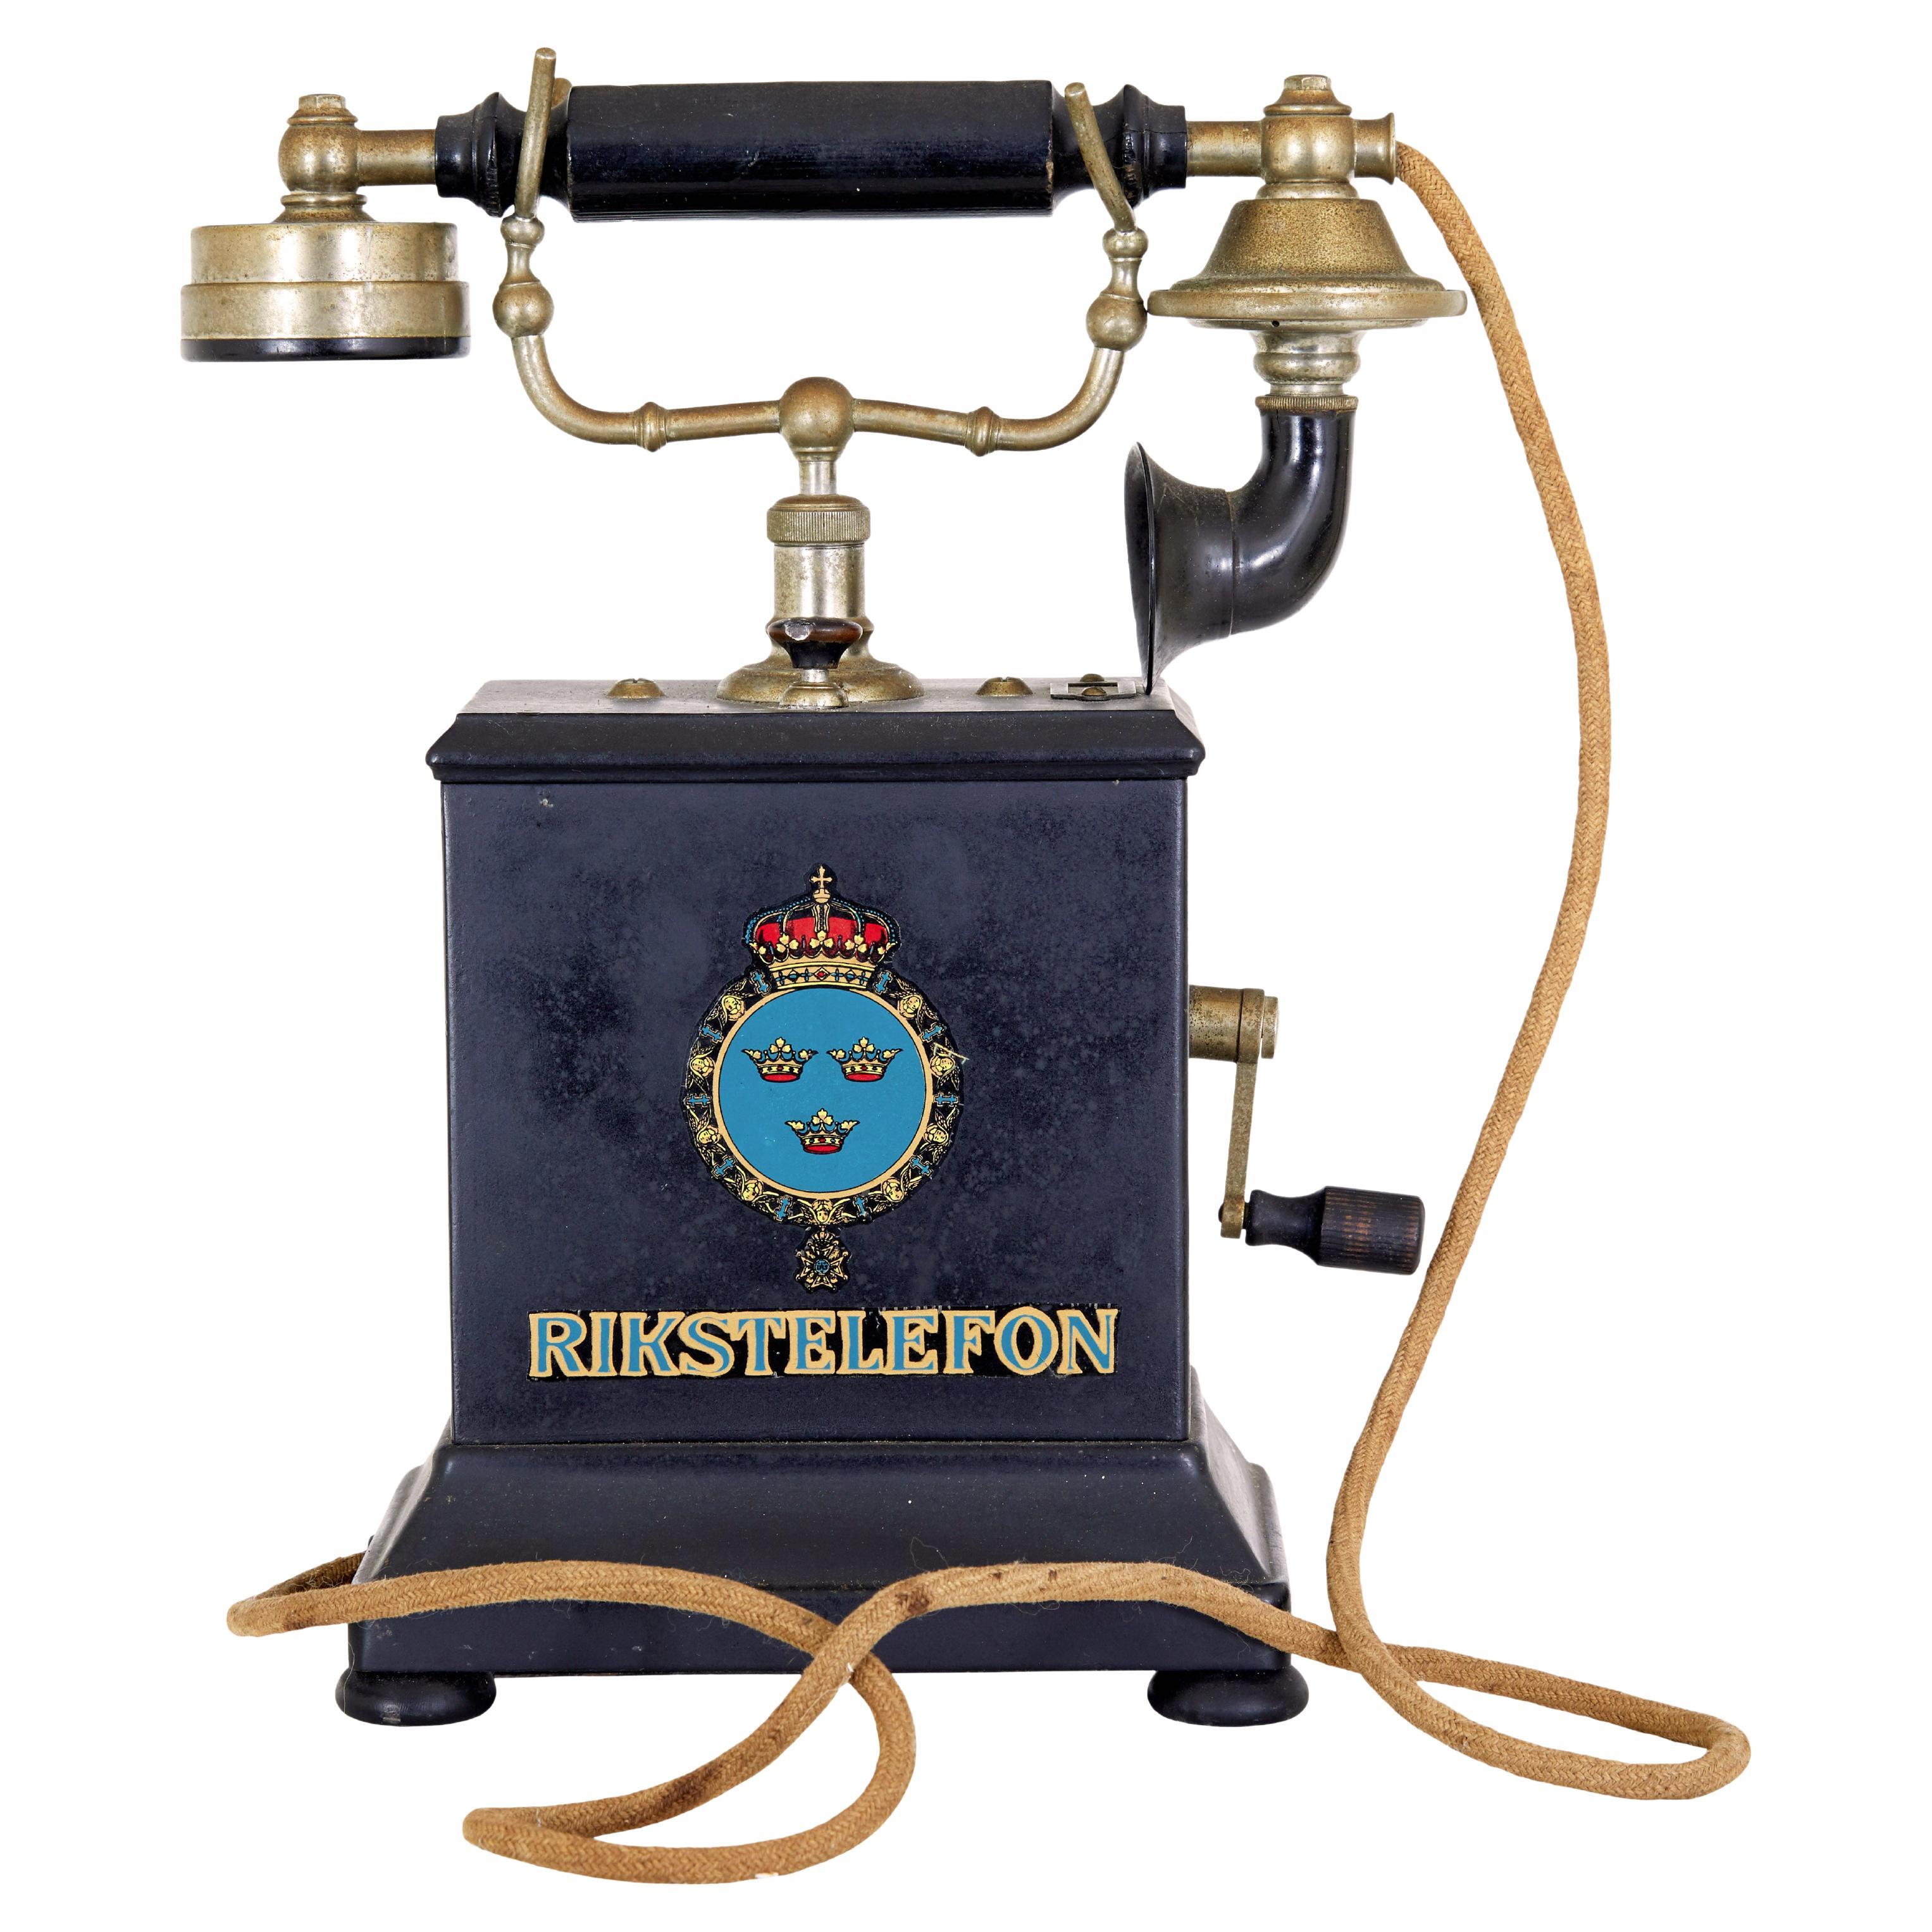 Early 20th century swedish metal telephone by Rikstelefon